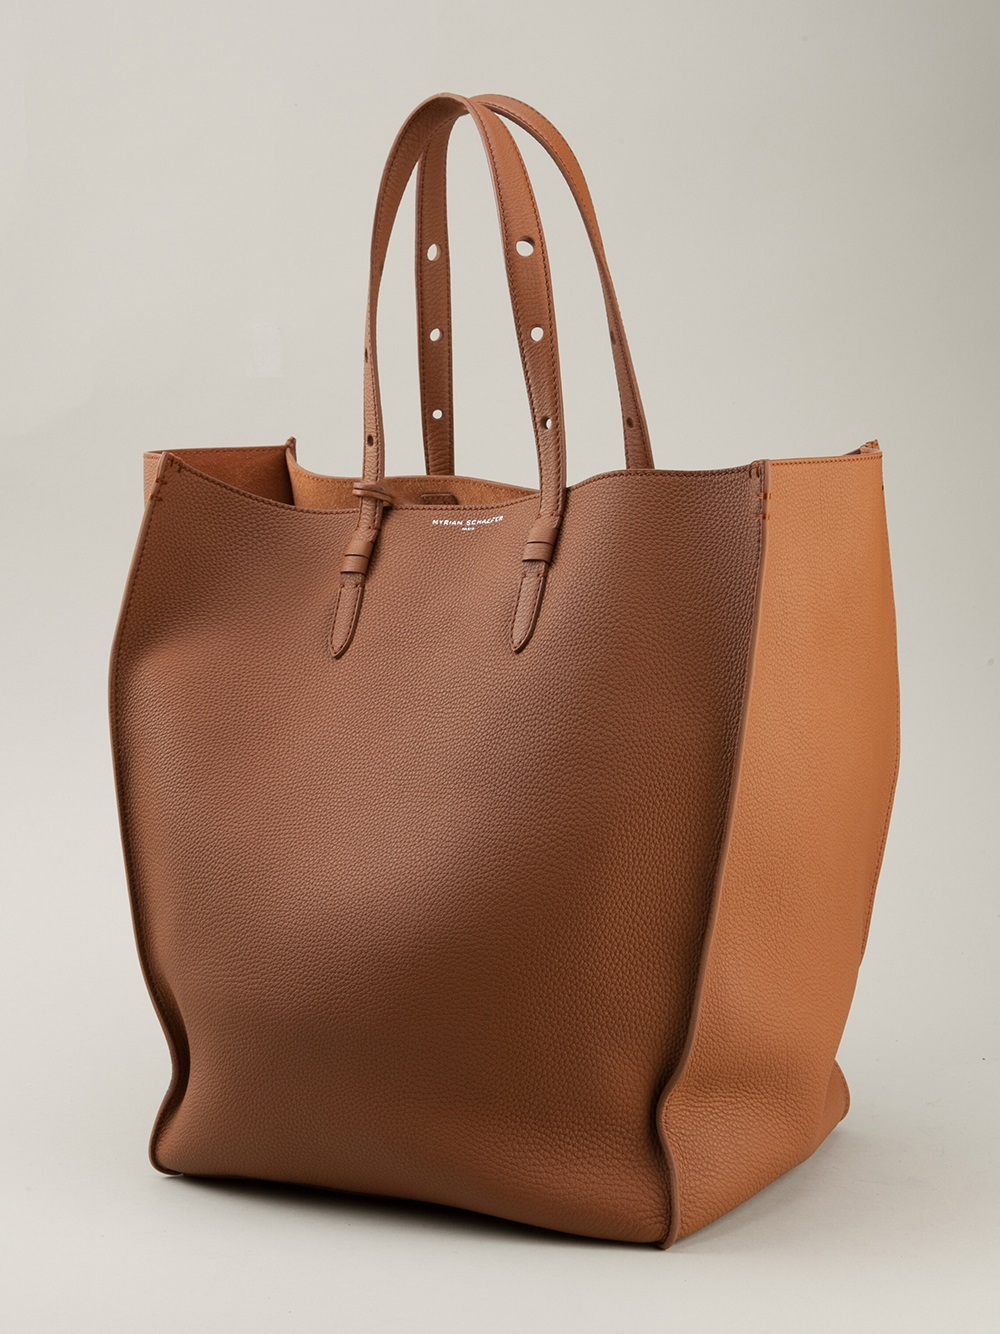 Myriam schaefer 'Wilde' Handbag in Brown | Lyst